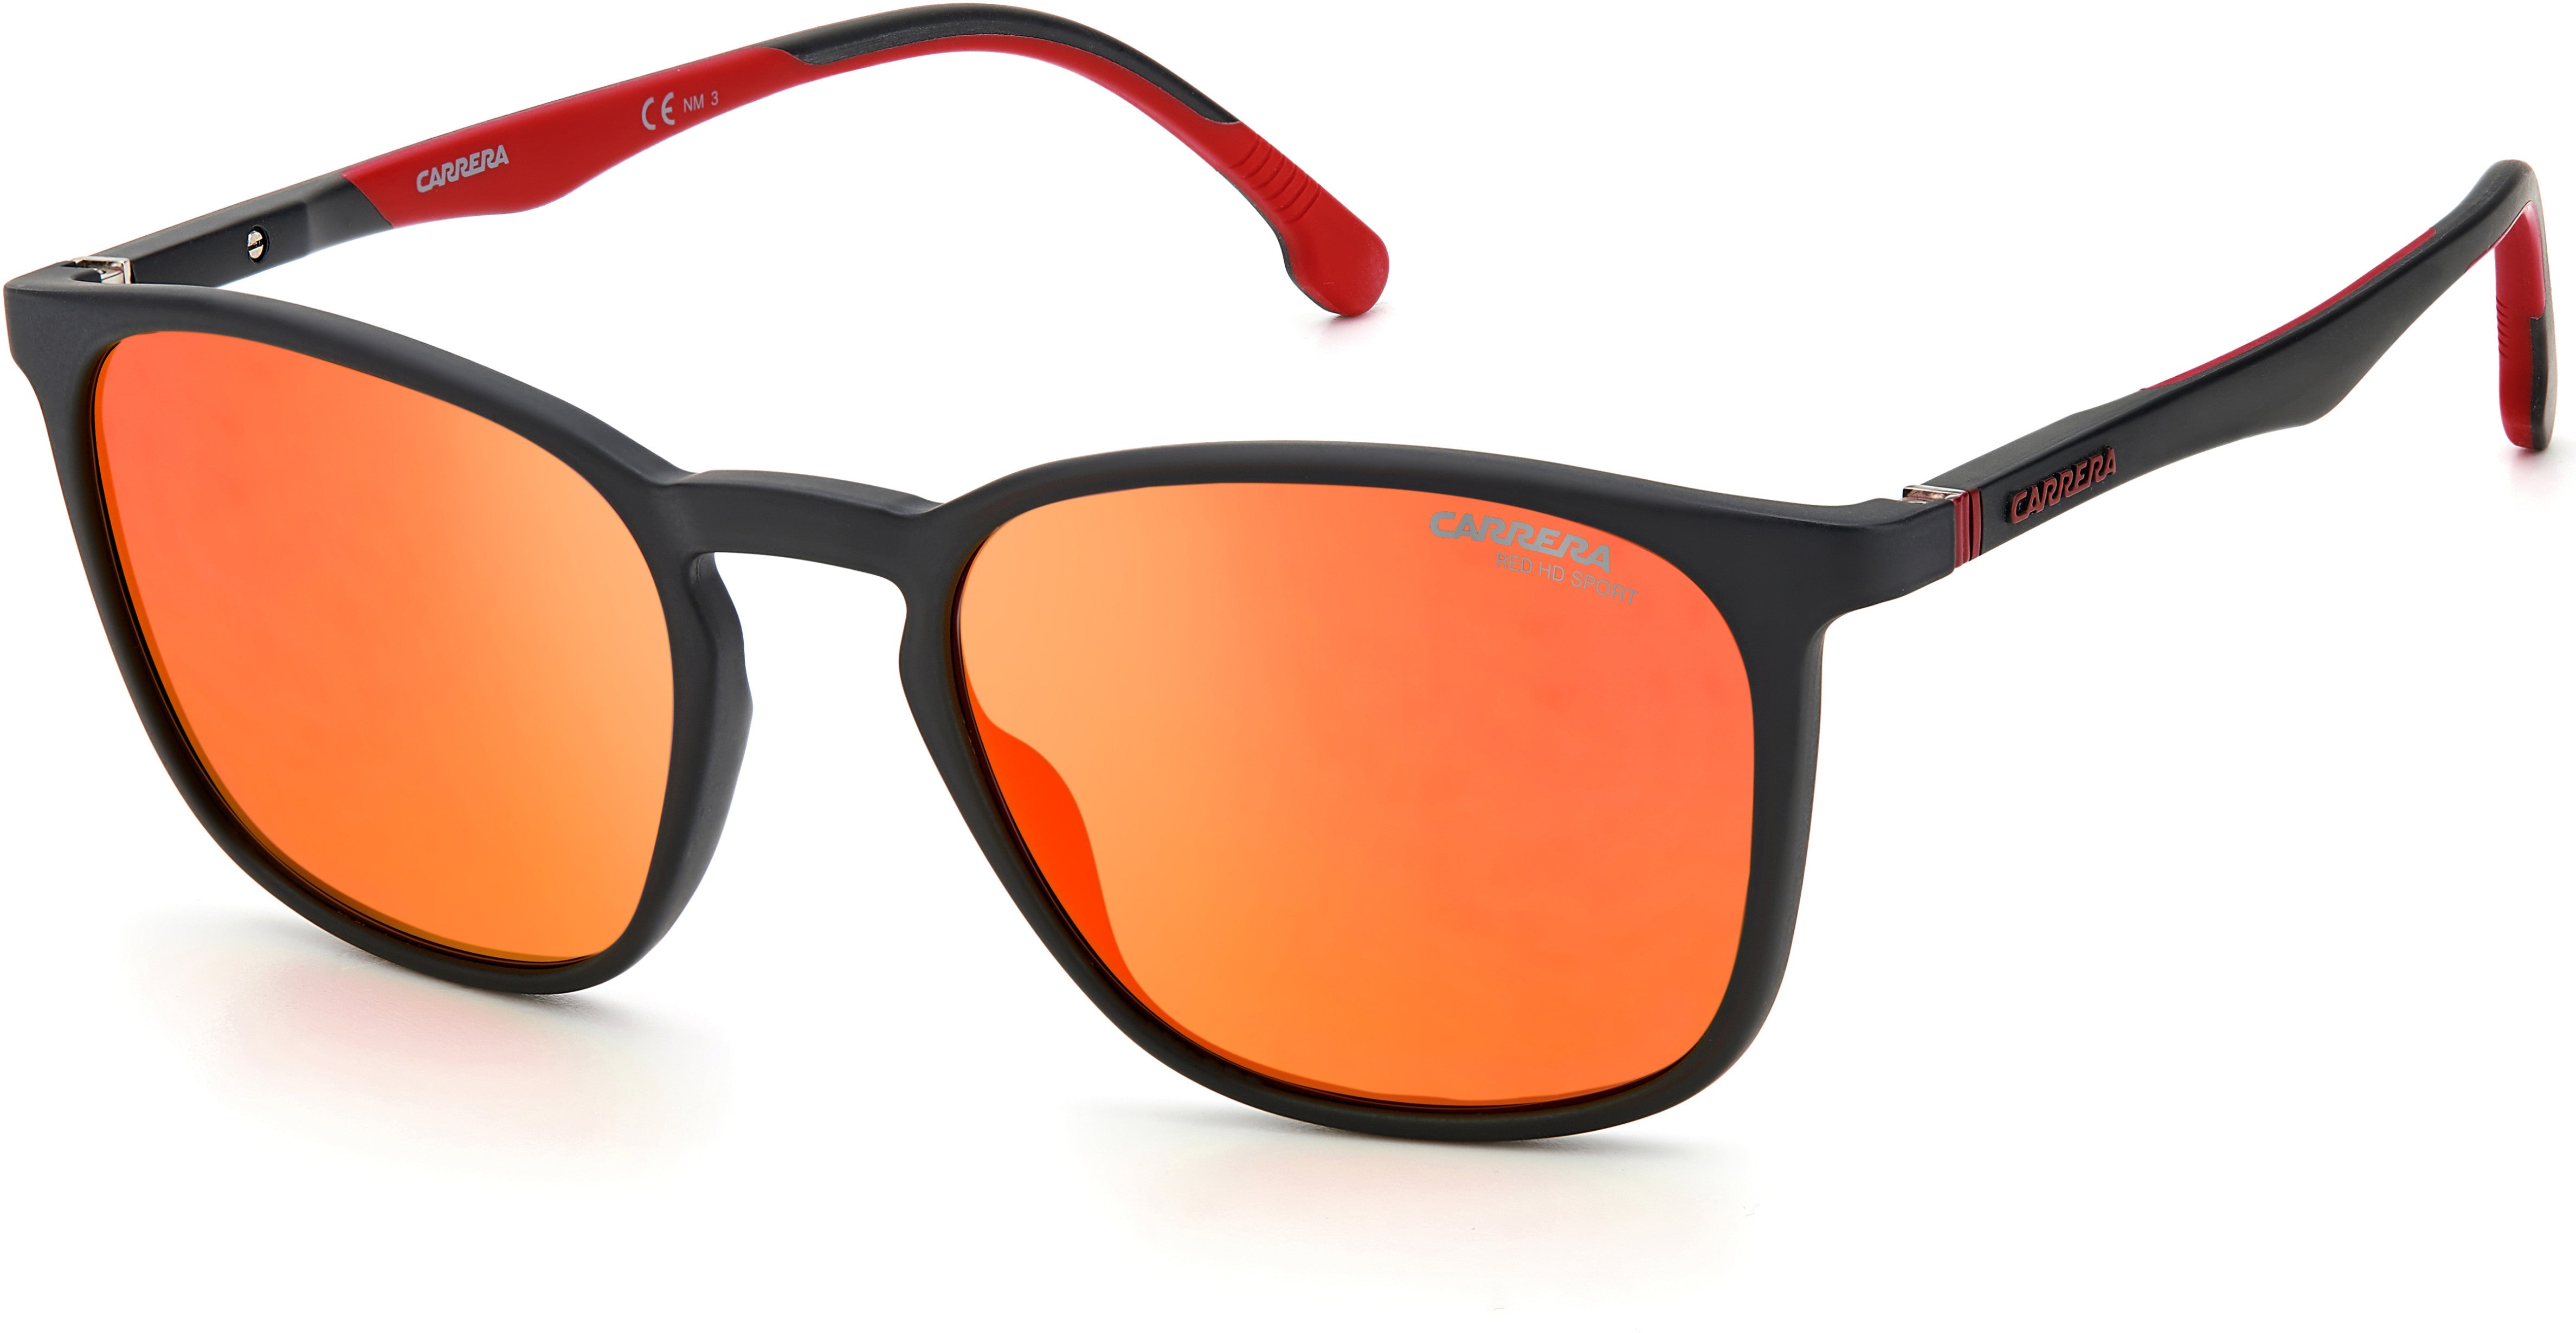  Carrera 8041/S Tea Cup Sunglasses 0OIT-0OIT  Black Redgd (W3 Red Hd Ml Ol)